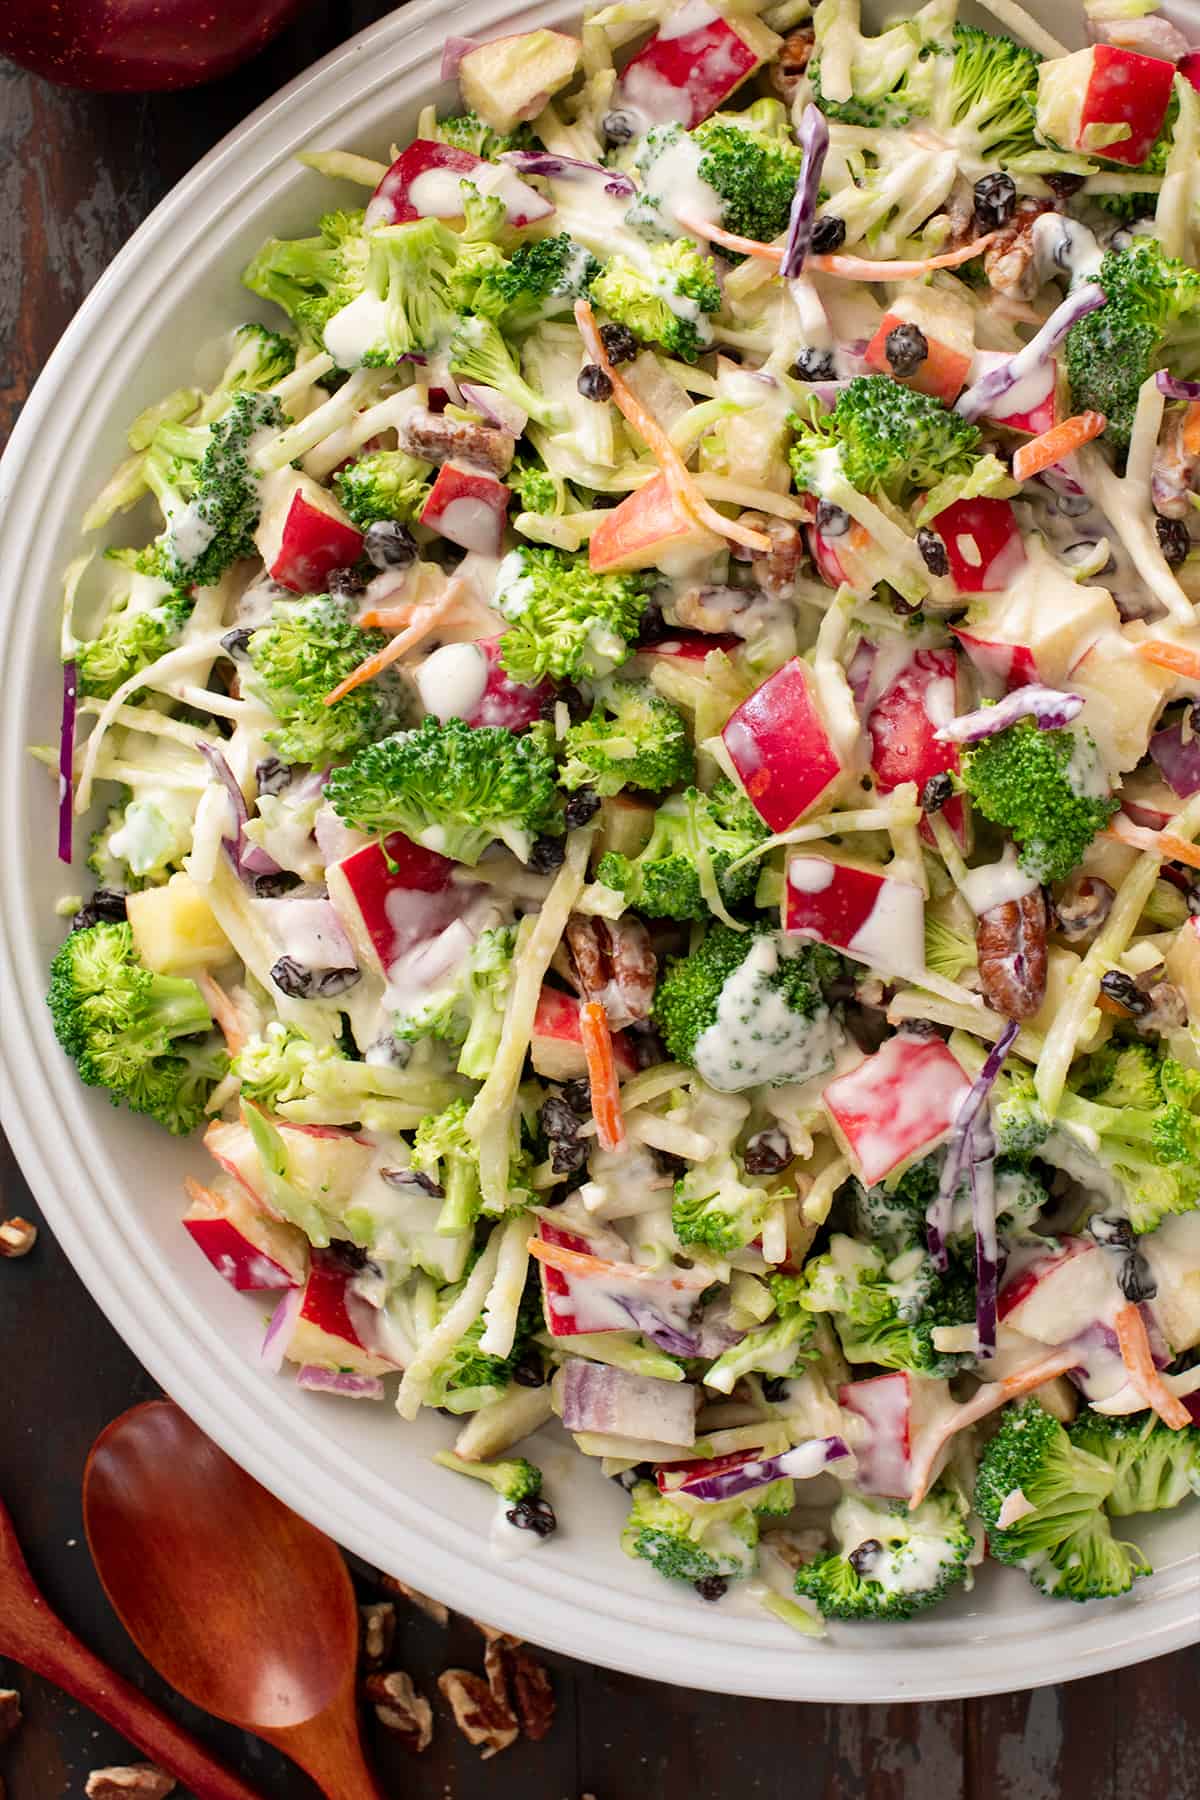 Overhead broccoli salad closeup to show texture and colors.